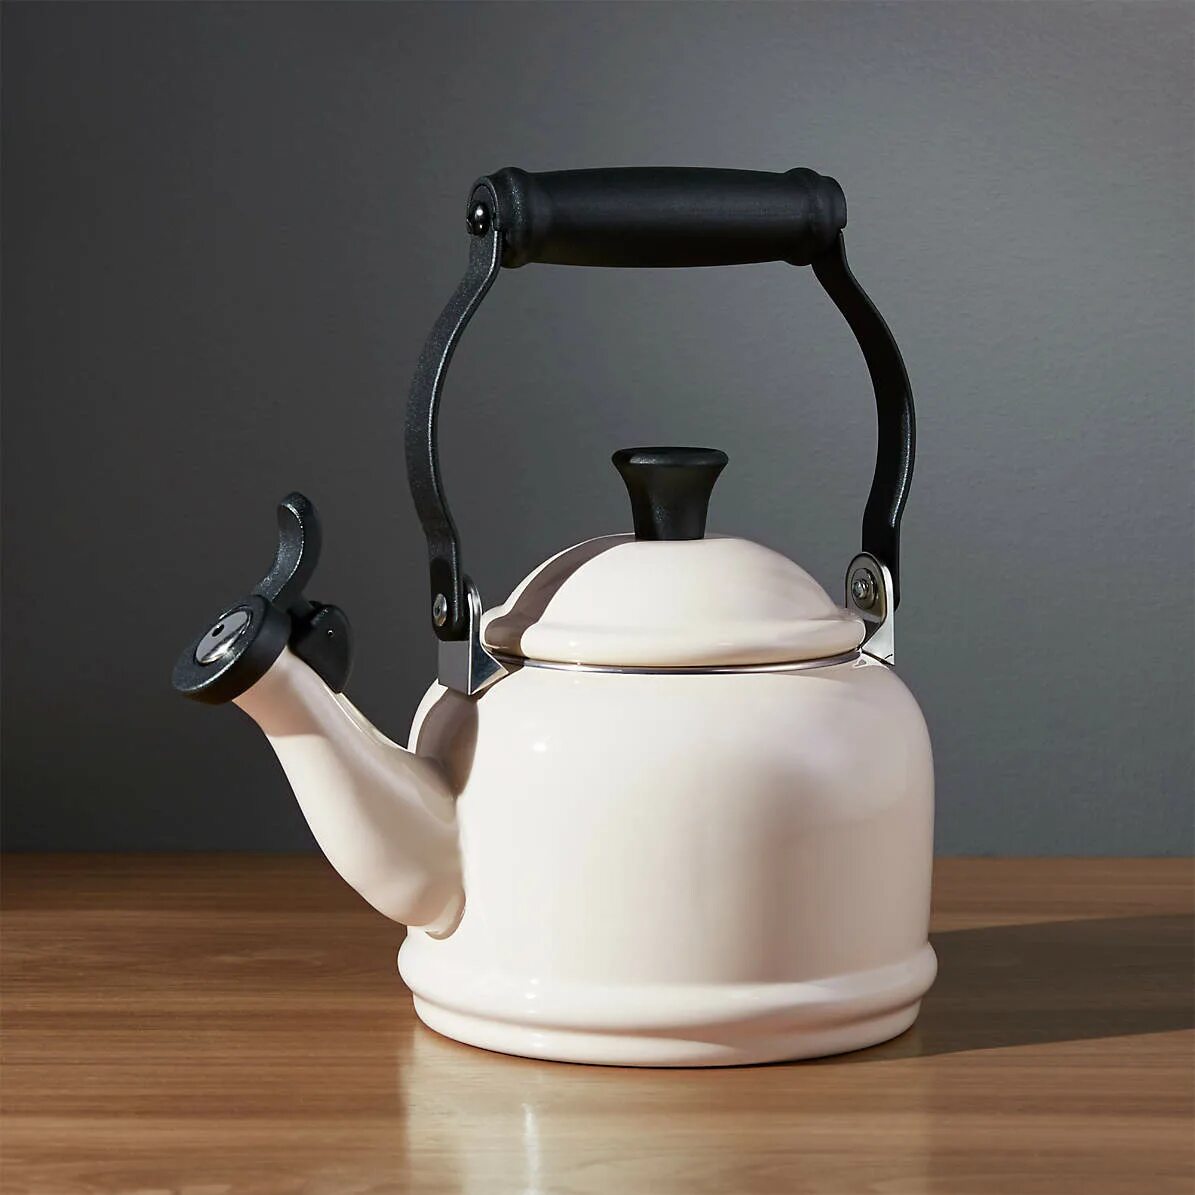 Чайник Solis Tea kettle Classic. Чайник kettle Classic Mr 1320. Чайник cozy Home. Creuset чайник со свистком Traditional kettle.